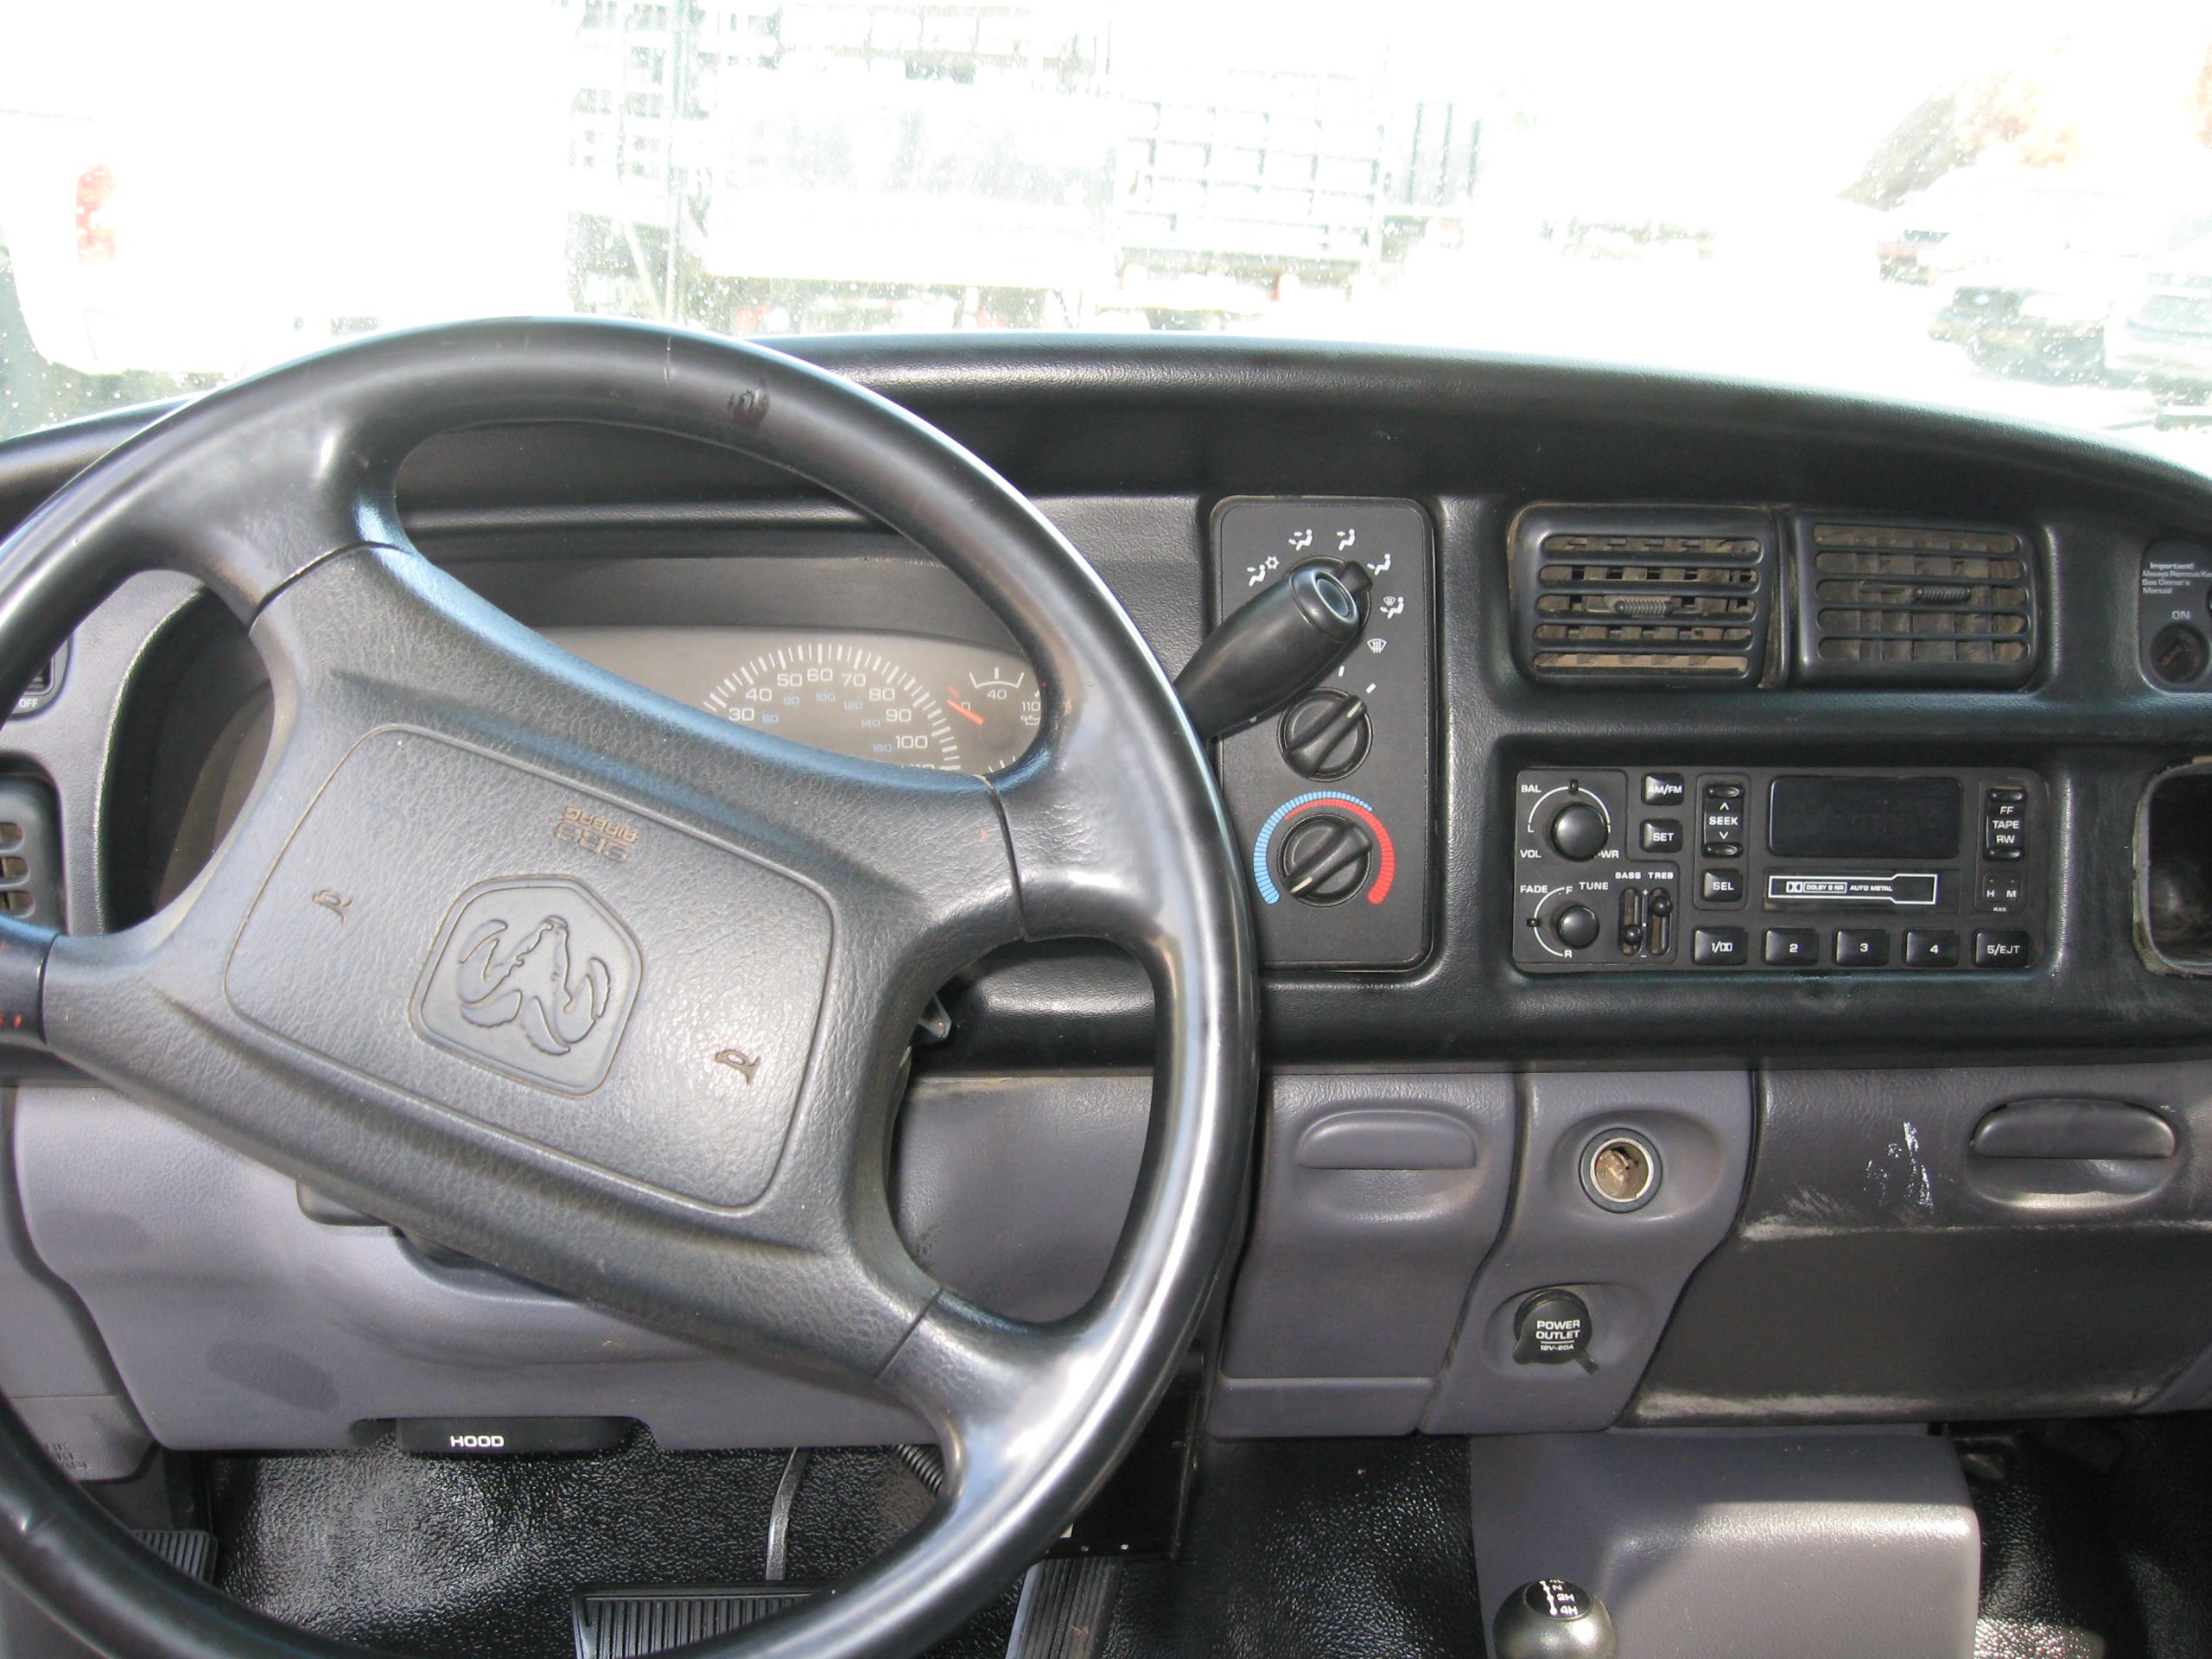 2001 Dodge 3500 Cummins Diesel Service Body IMG_0004-Copy-1-scaled